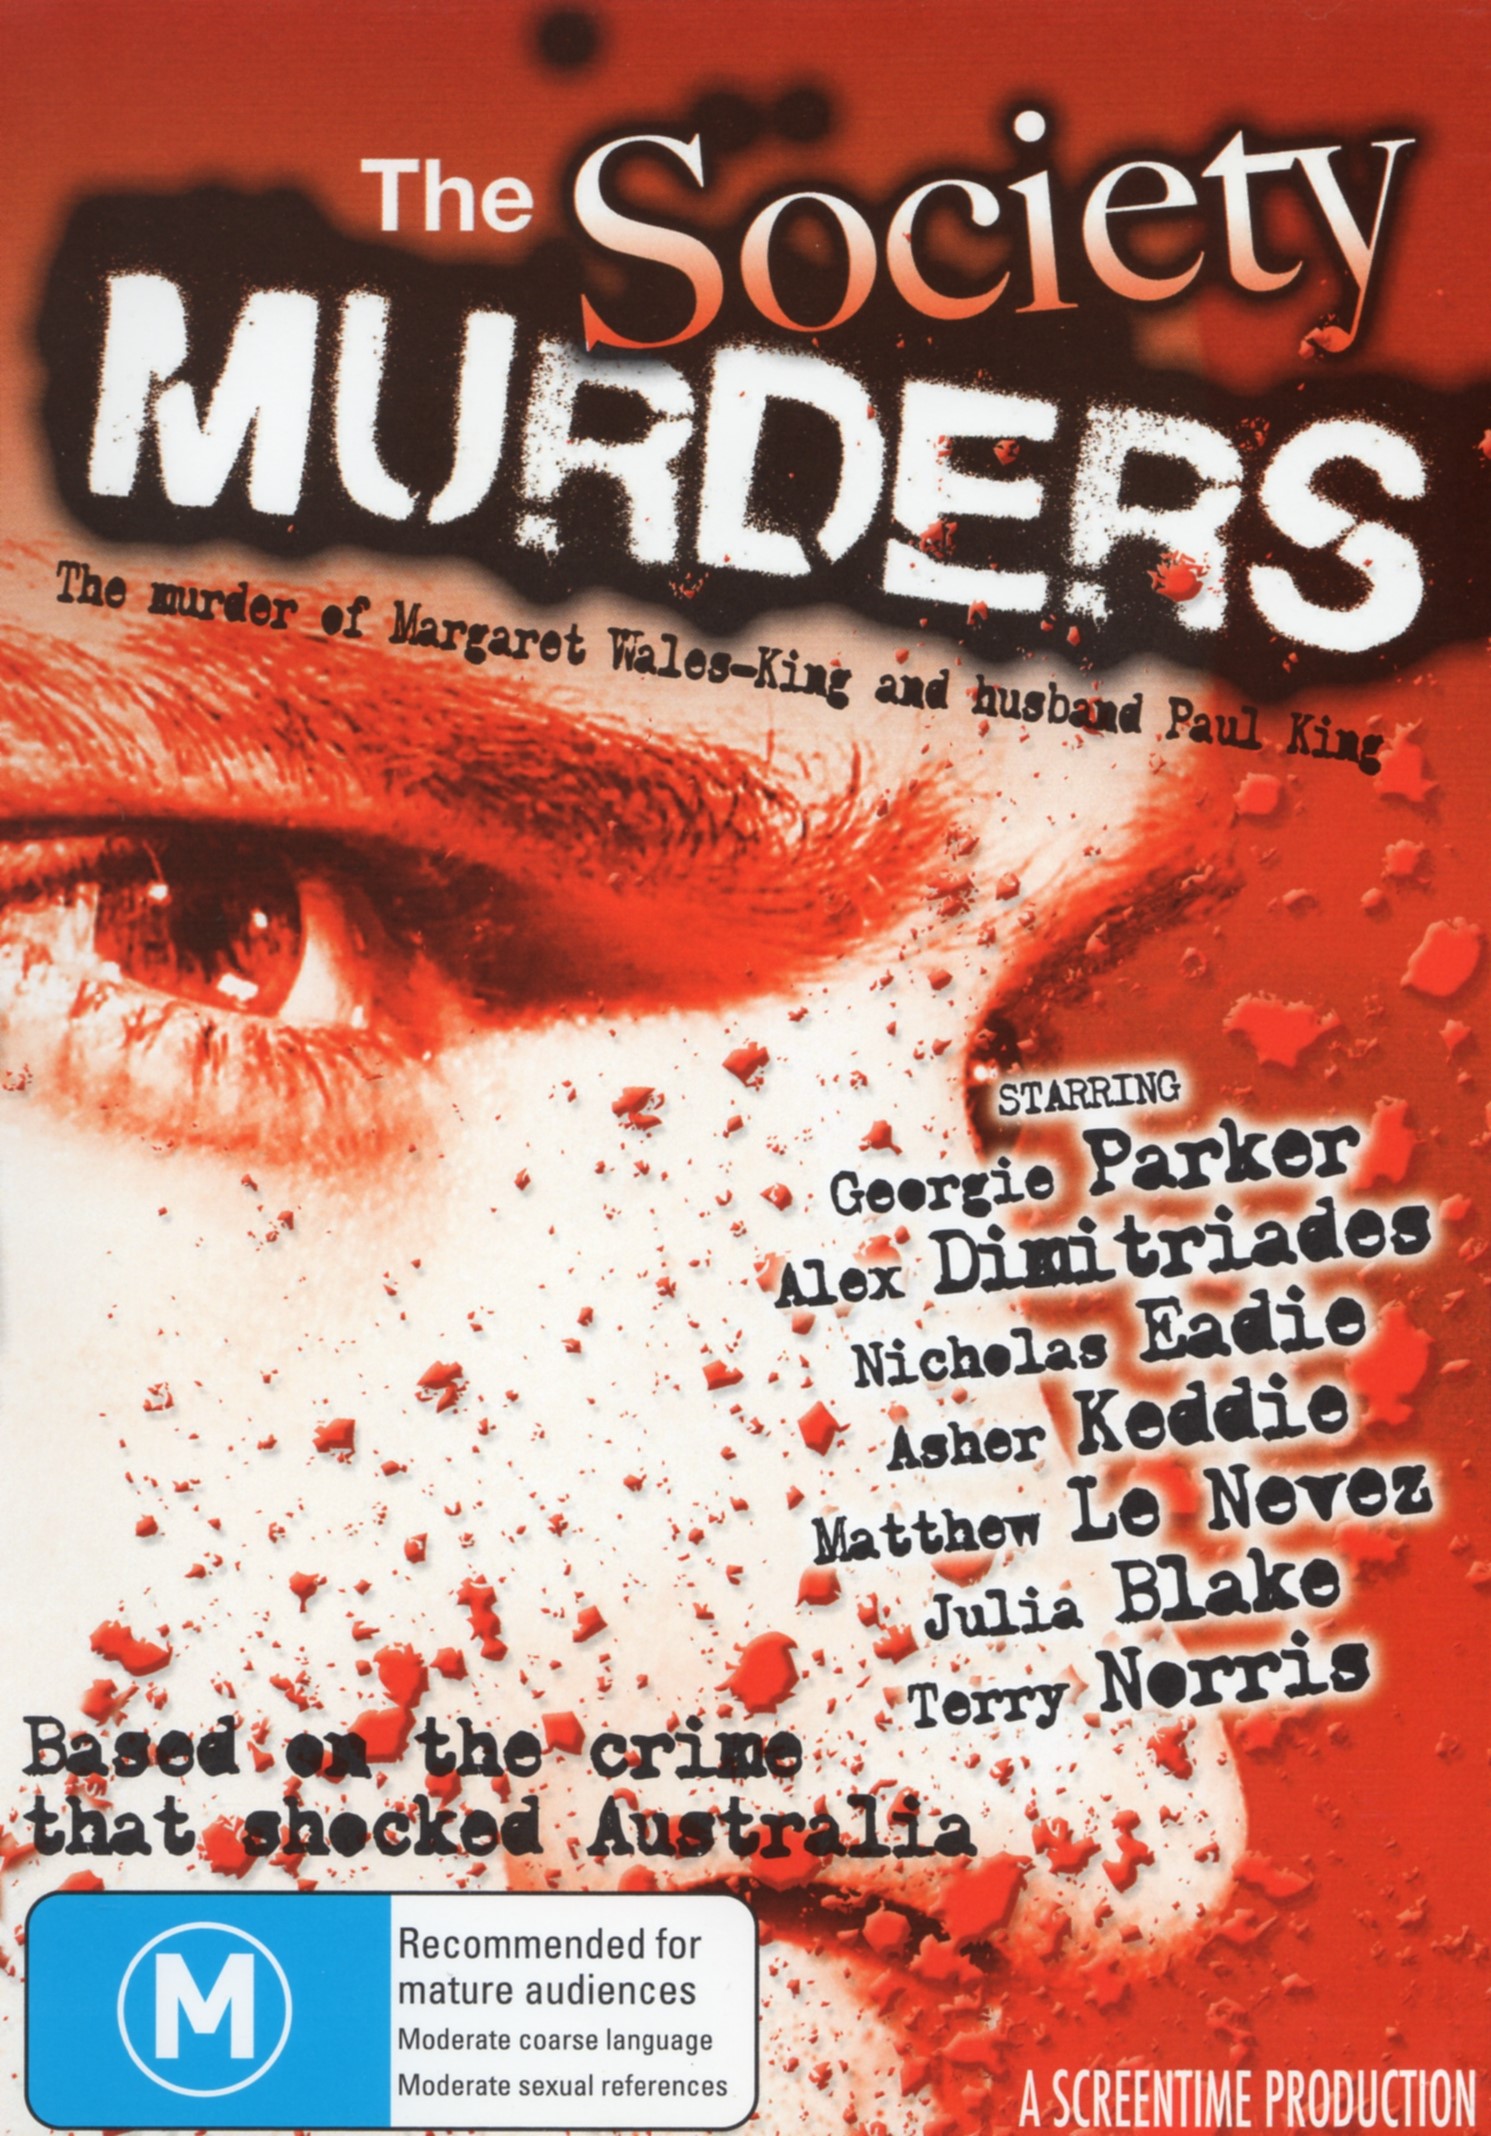 The Society Murders (2006) Screenshot 3 